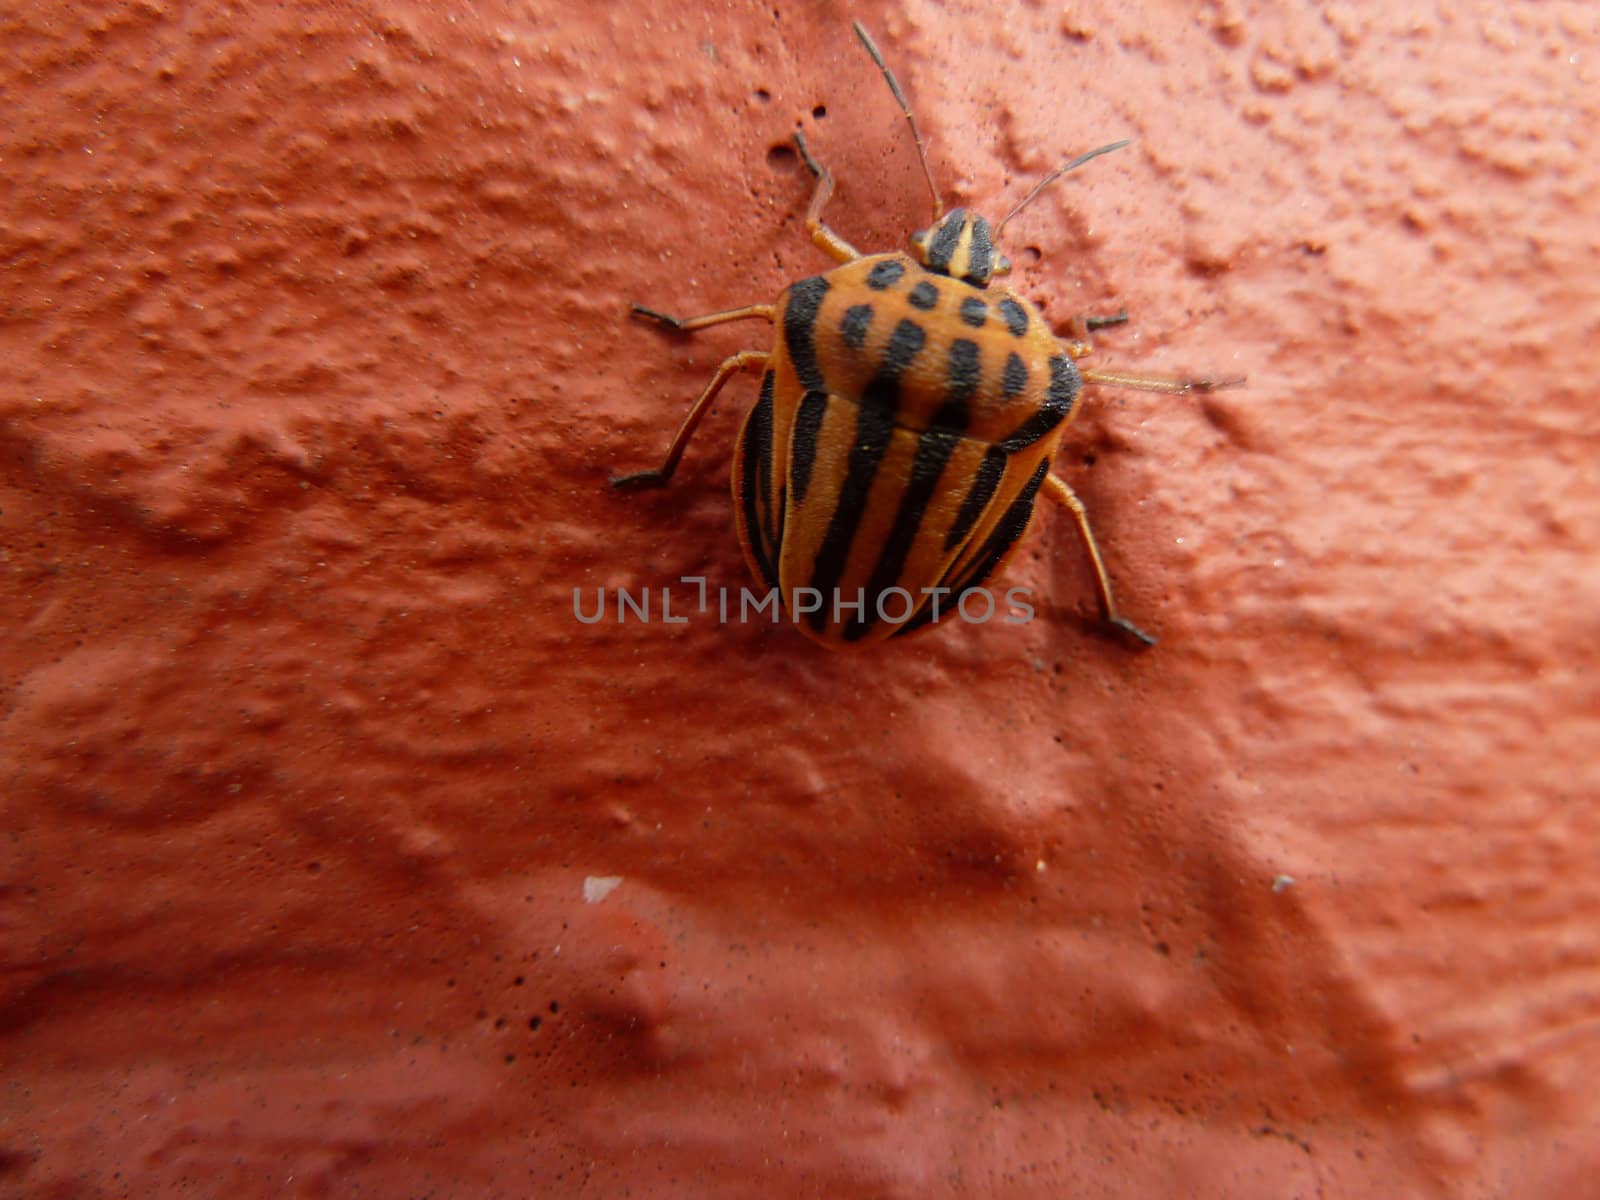 Colorado potato beetle by gazmoi